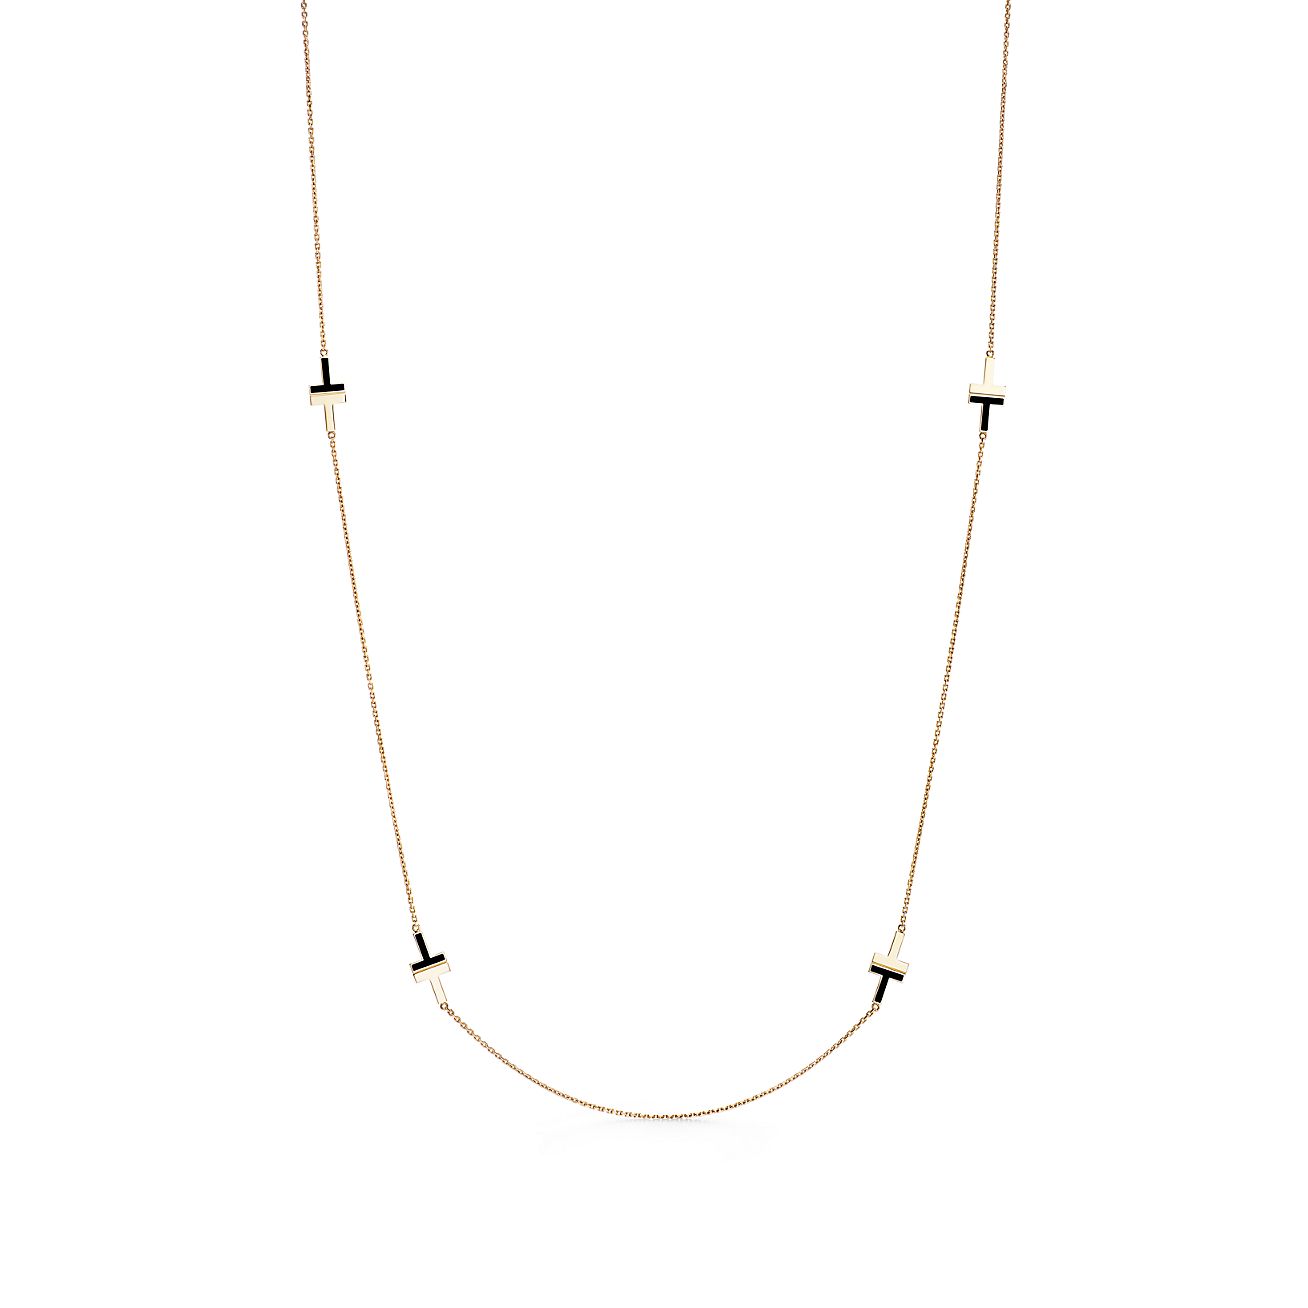 Tiffany T black onyx station necklace in 18k gold. | Tiffany & Co.